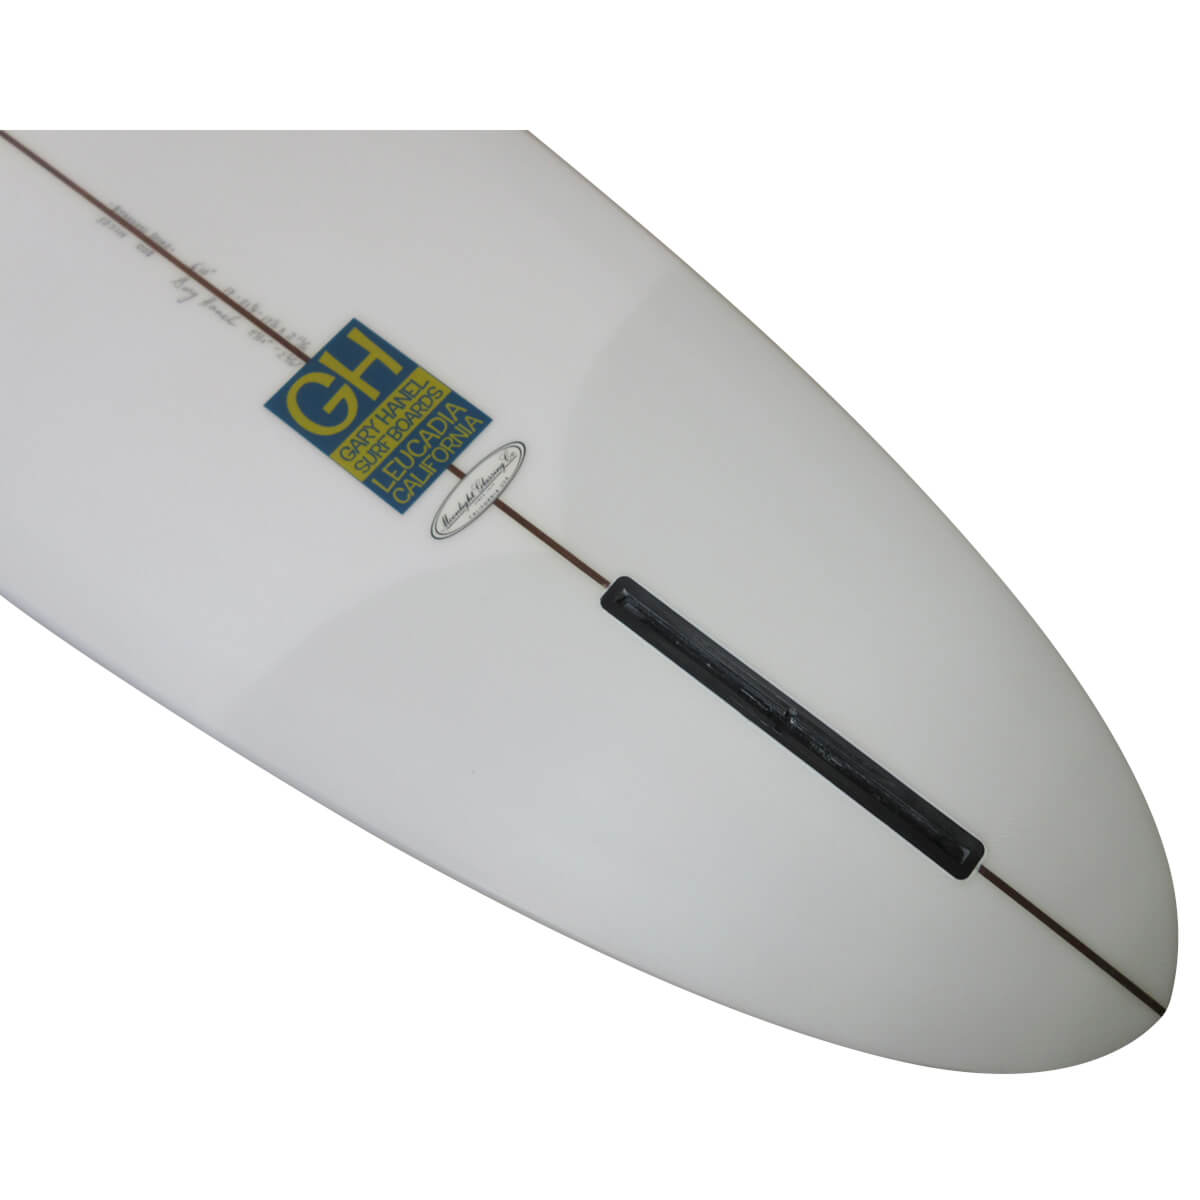 Gary Hanel Surfboards : DEE DROP 6`10